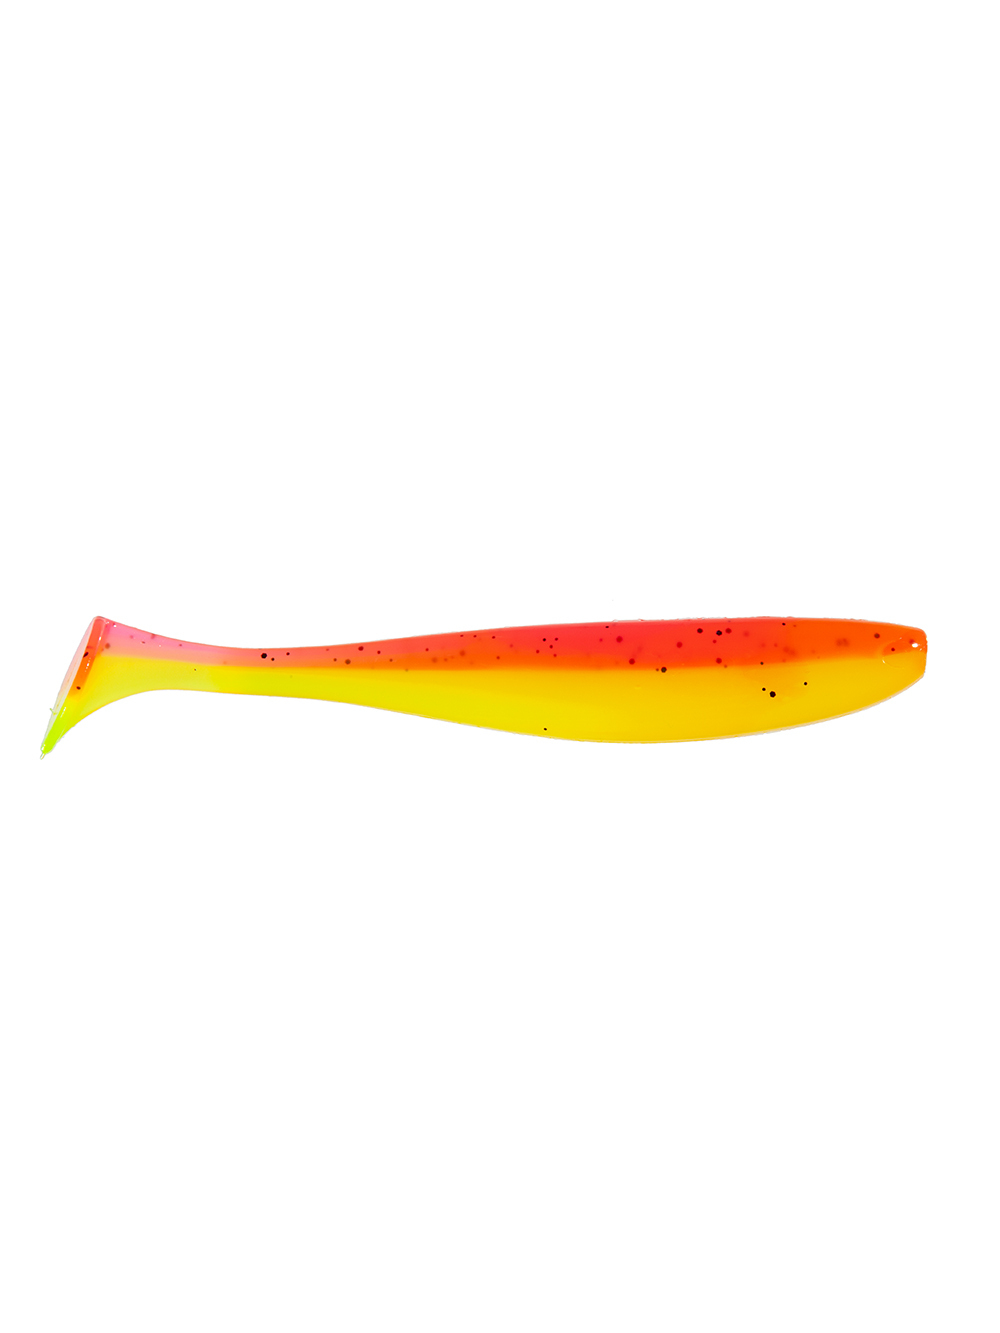 Приманка ZUB-IZI 86мм(3,4")-5шт, (цвет 023) желтый верх-розовый низ